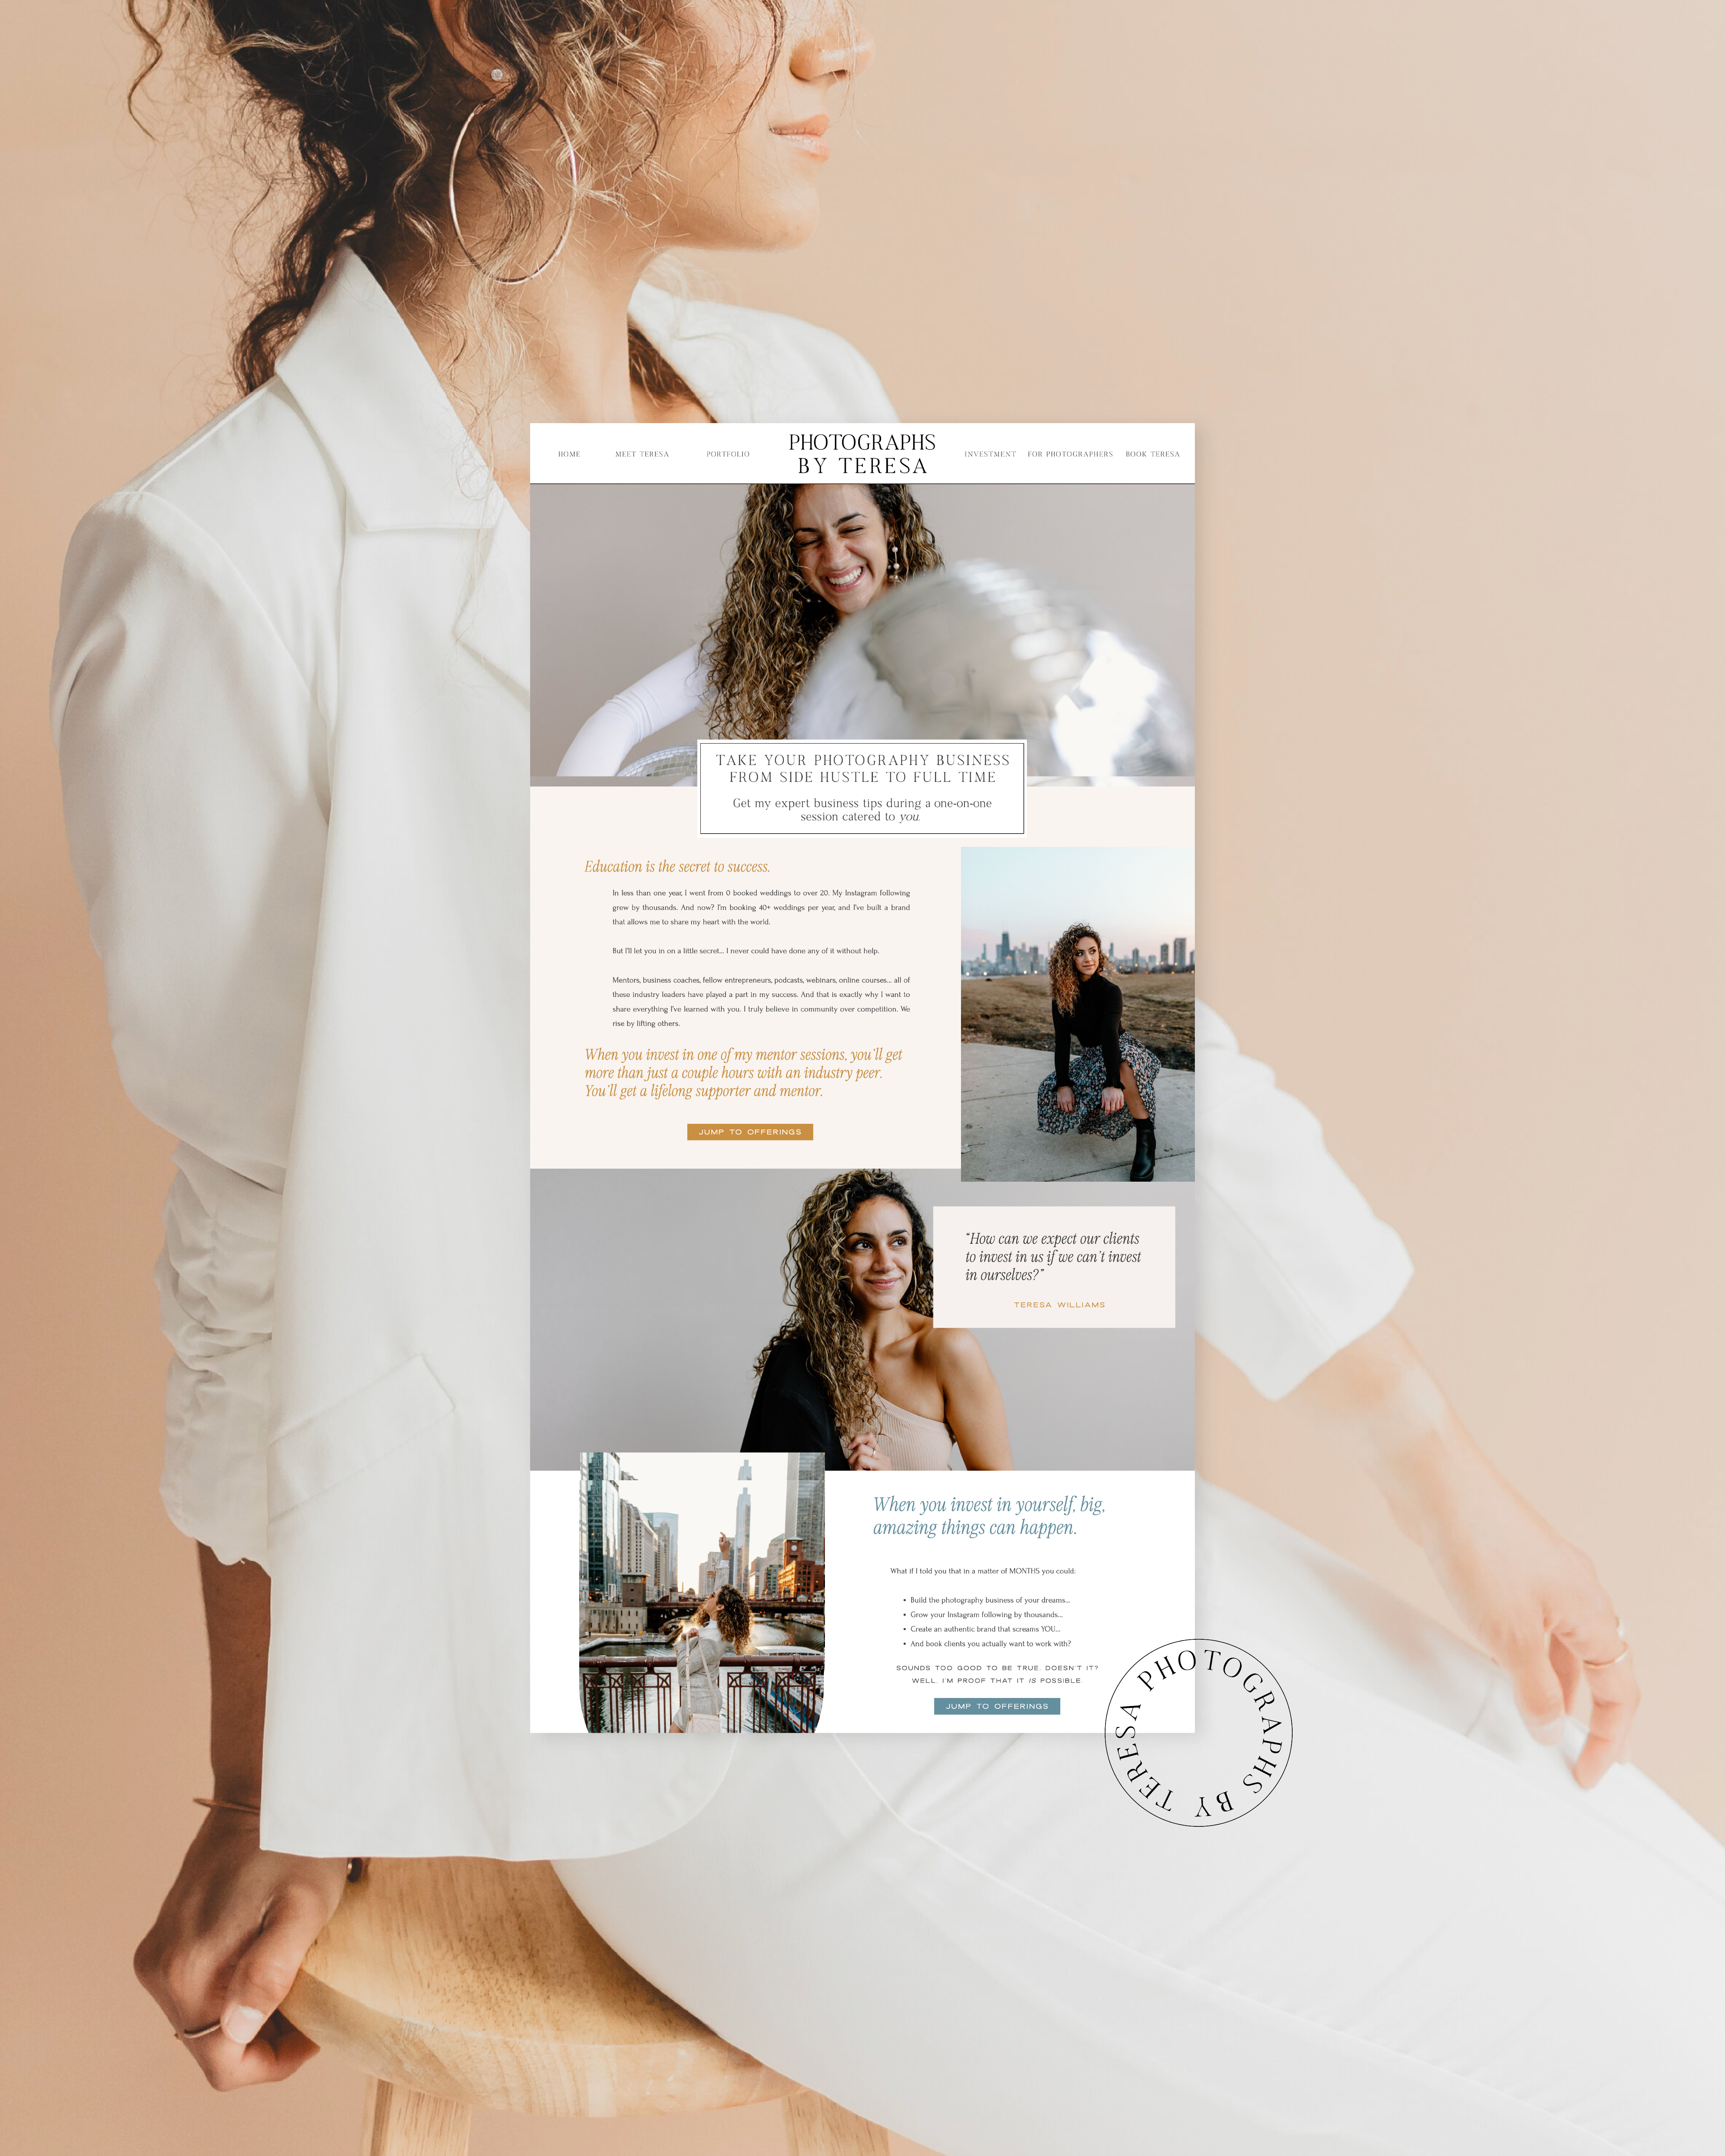 Wedding photographer website design mockup